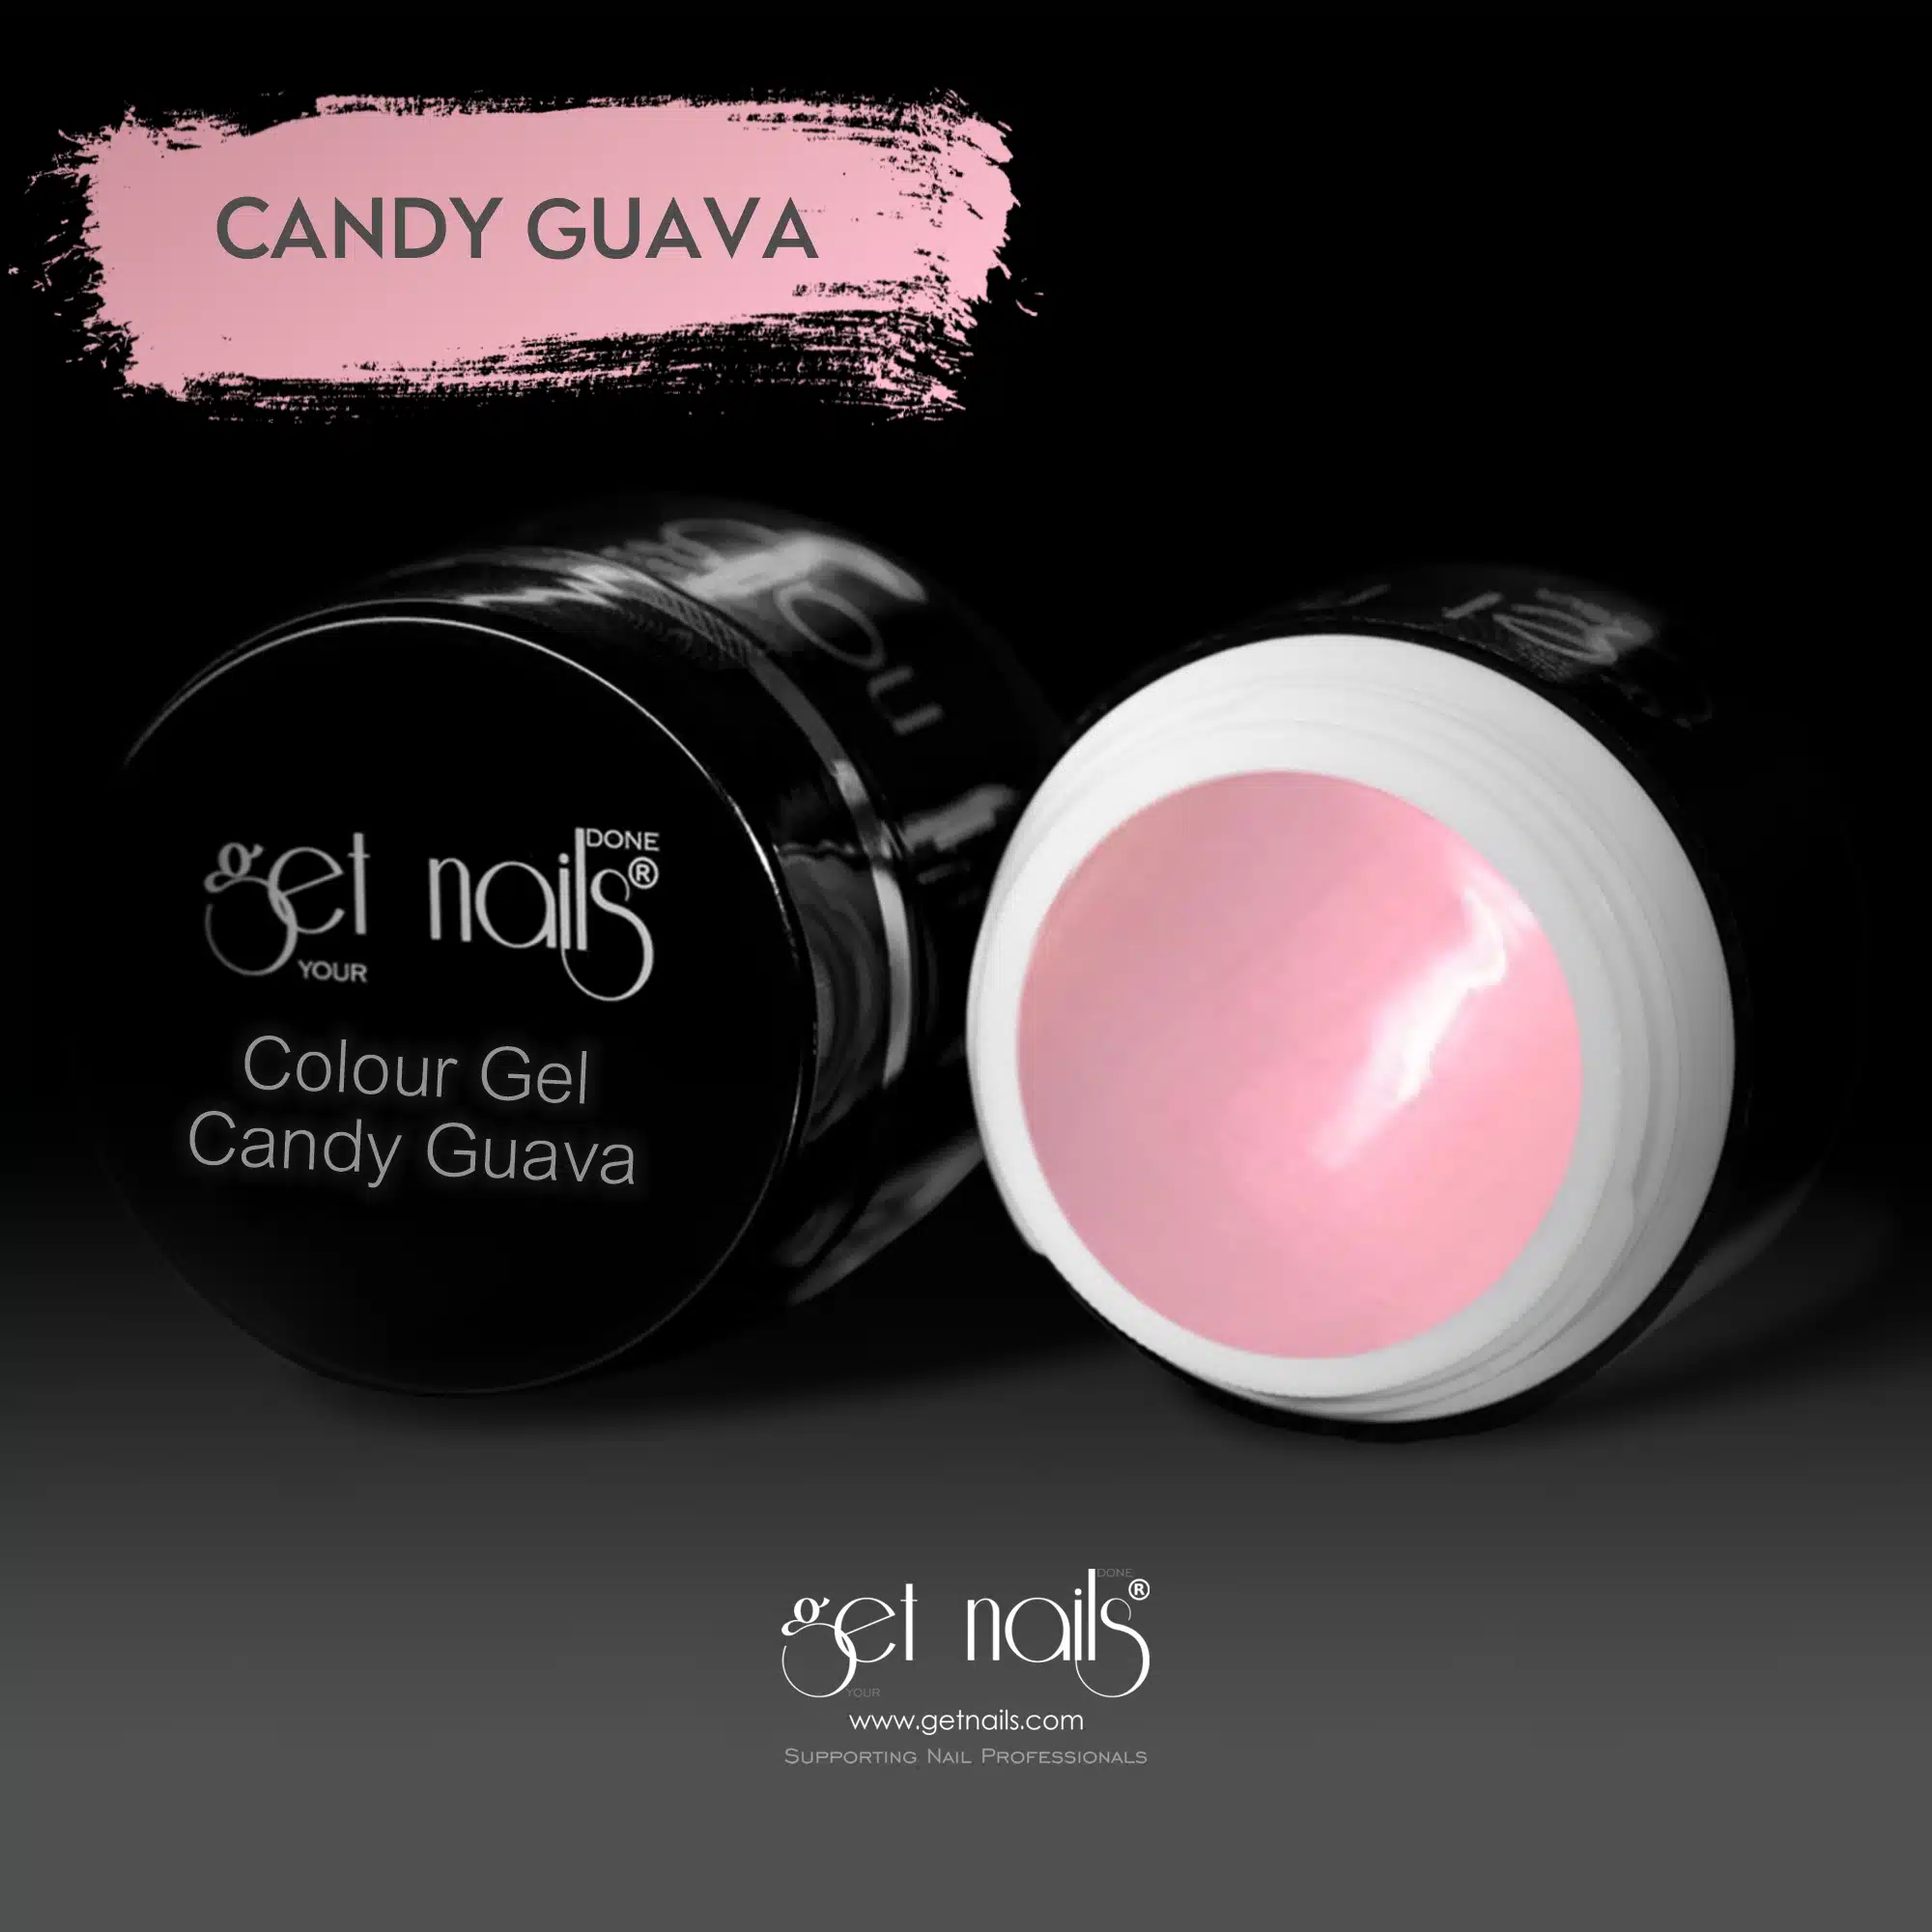 Get Nails Austria - Gel colorato Candy Guava 5g